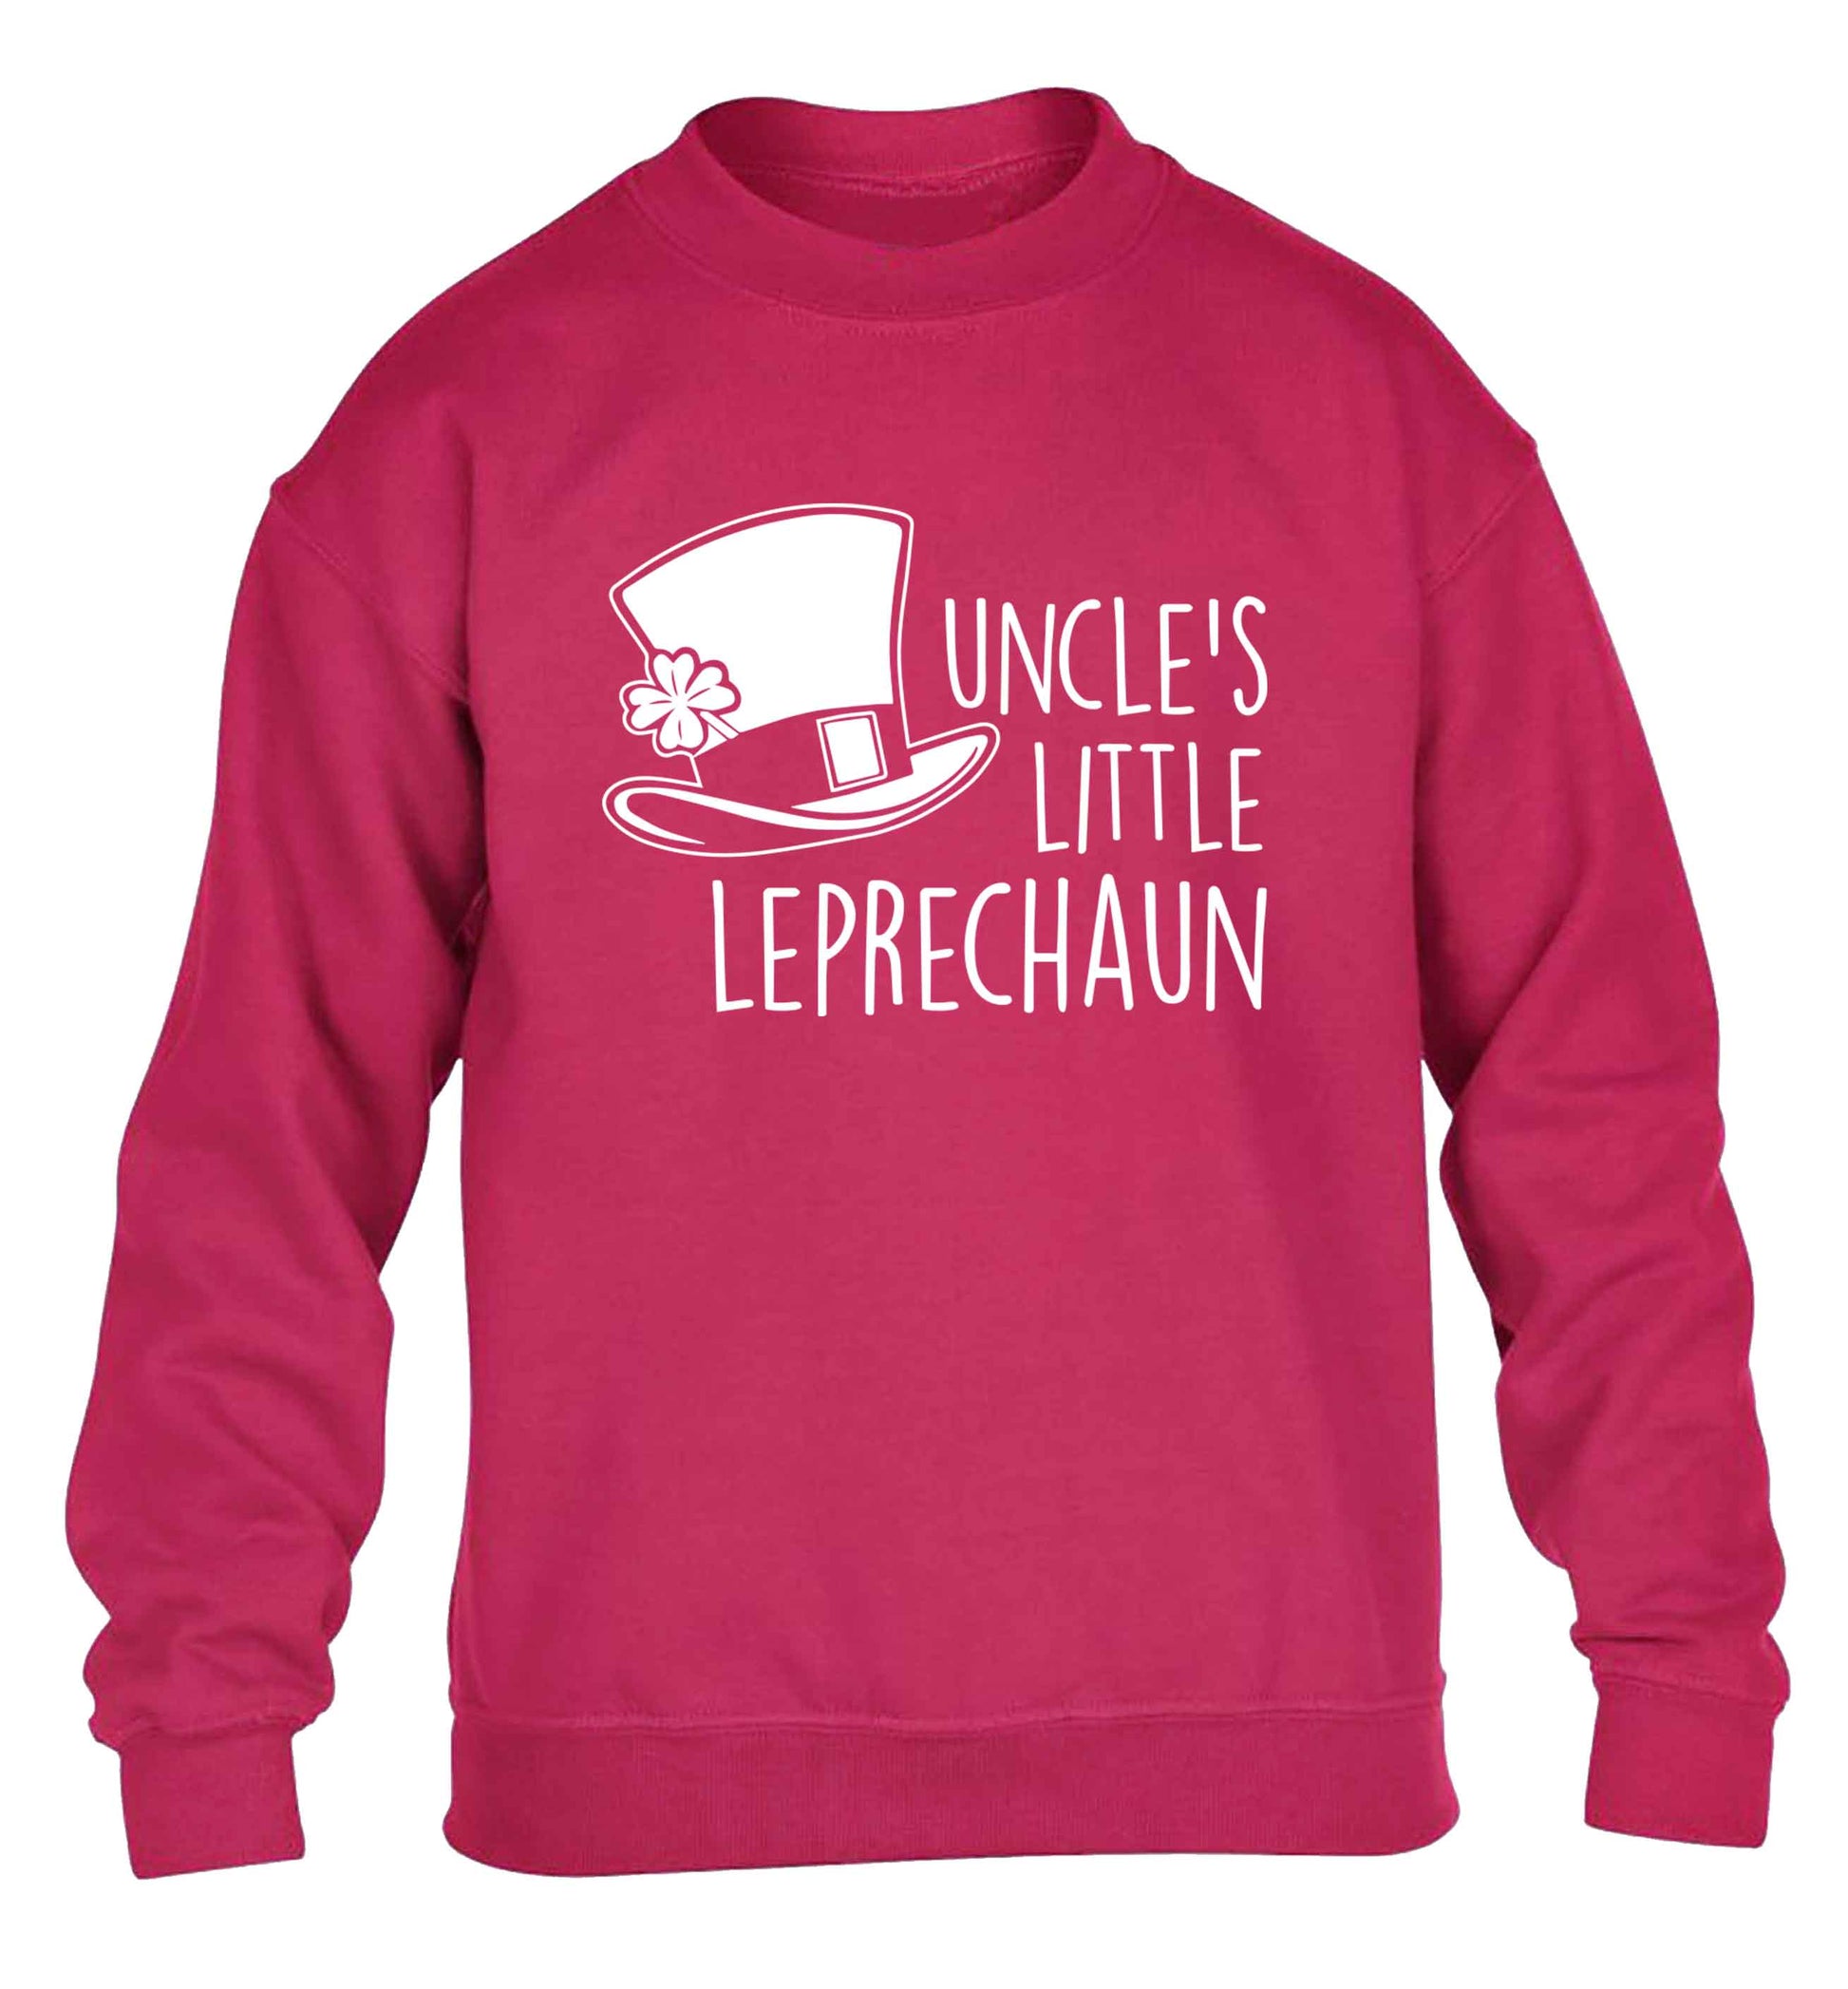 Uncles little leprechaun children's pink sweater 12-13 Years